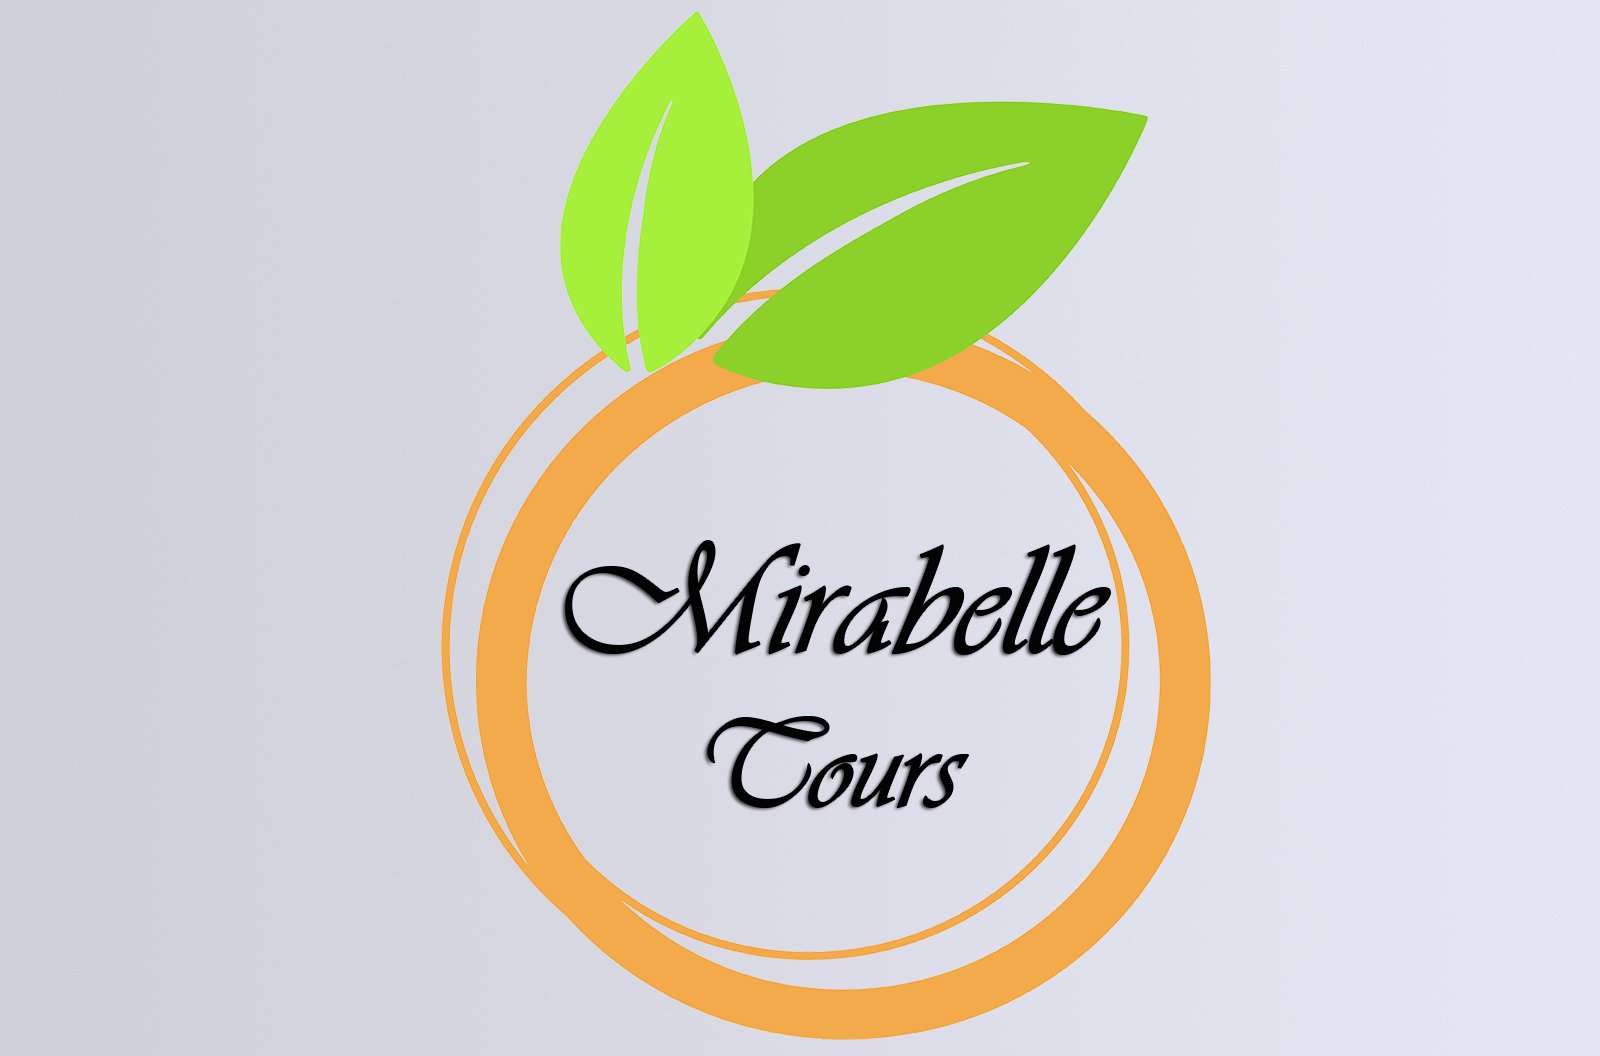 Mirabelle Tours